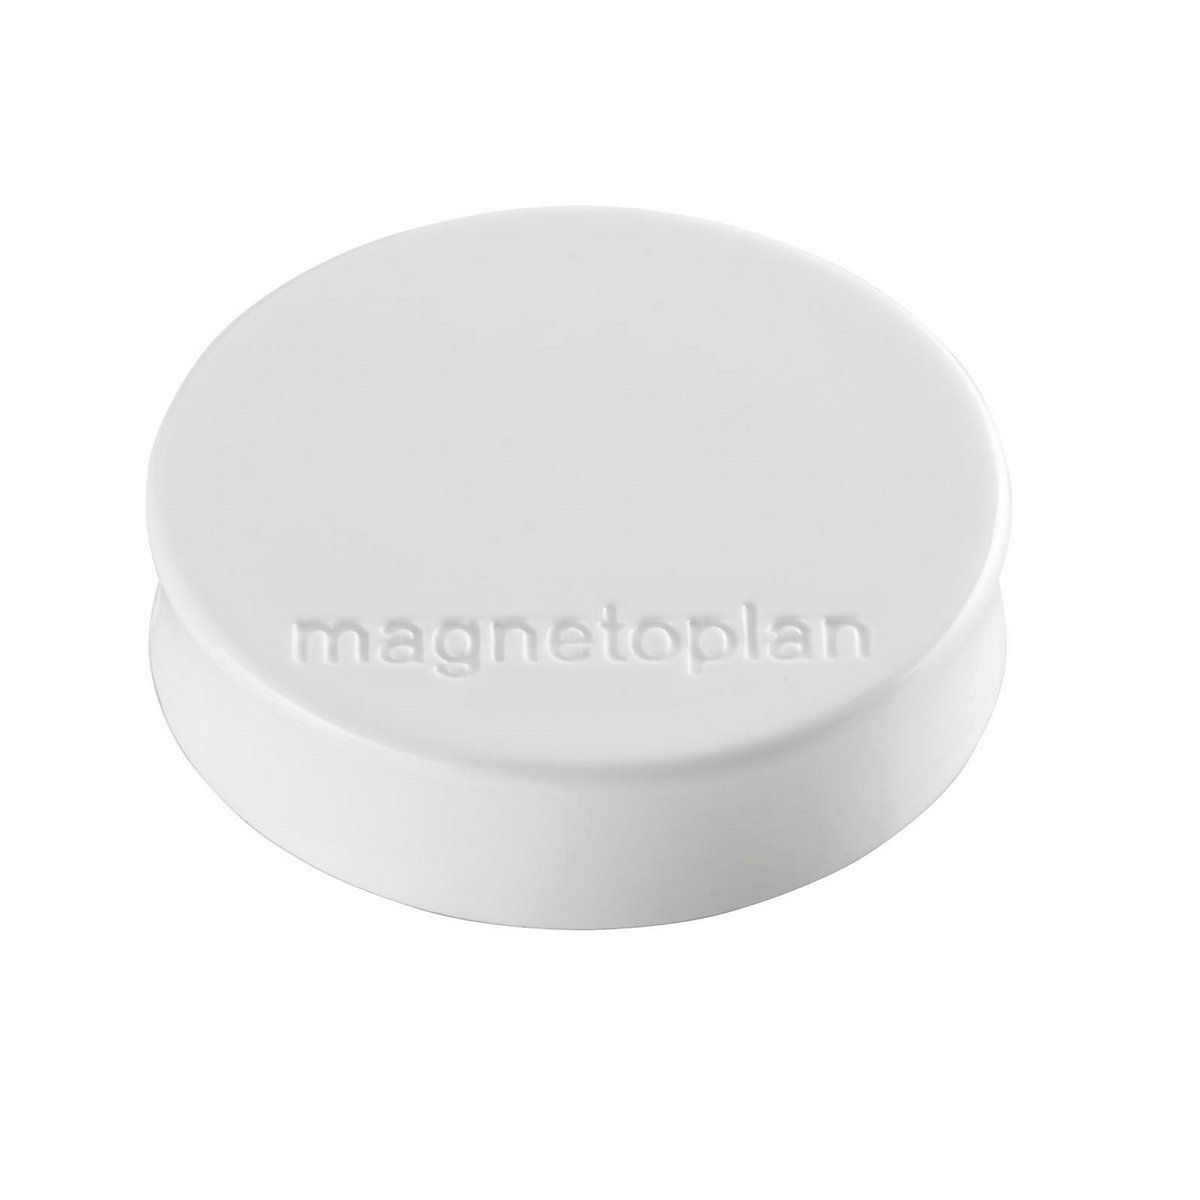 Ergo-Magnet magnetoplan, Ø 30 mm, VE 60 Stk, weiß-7